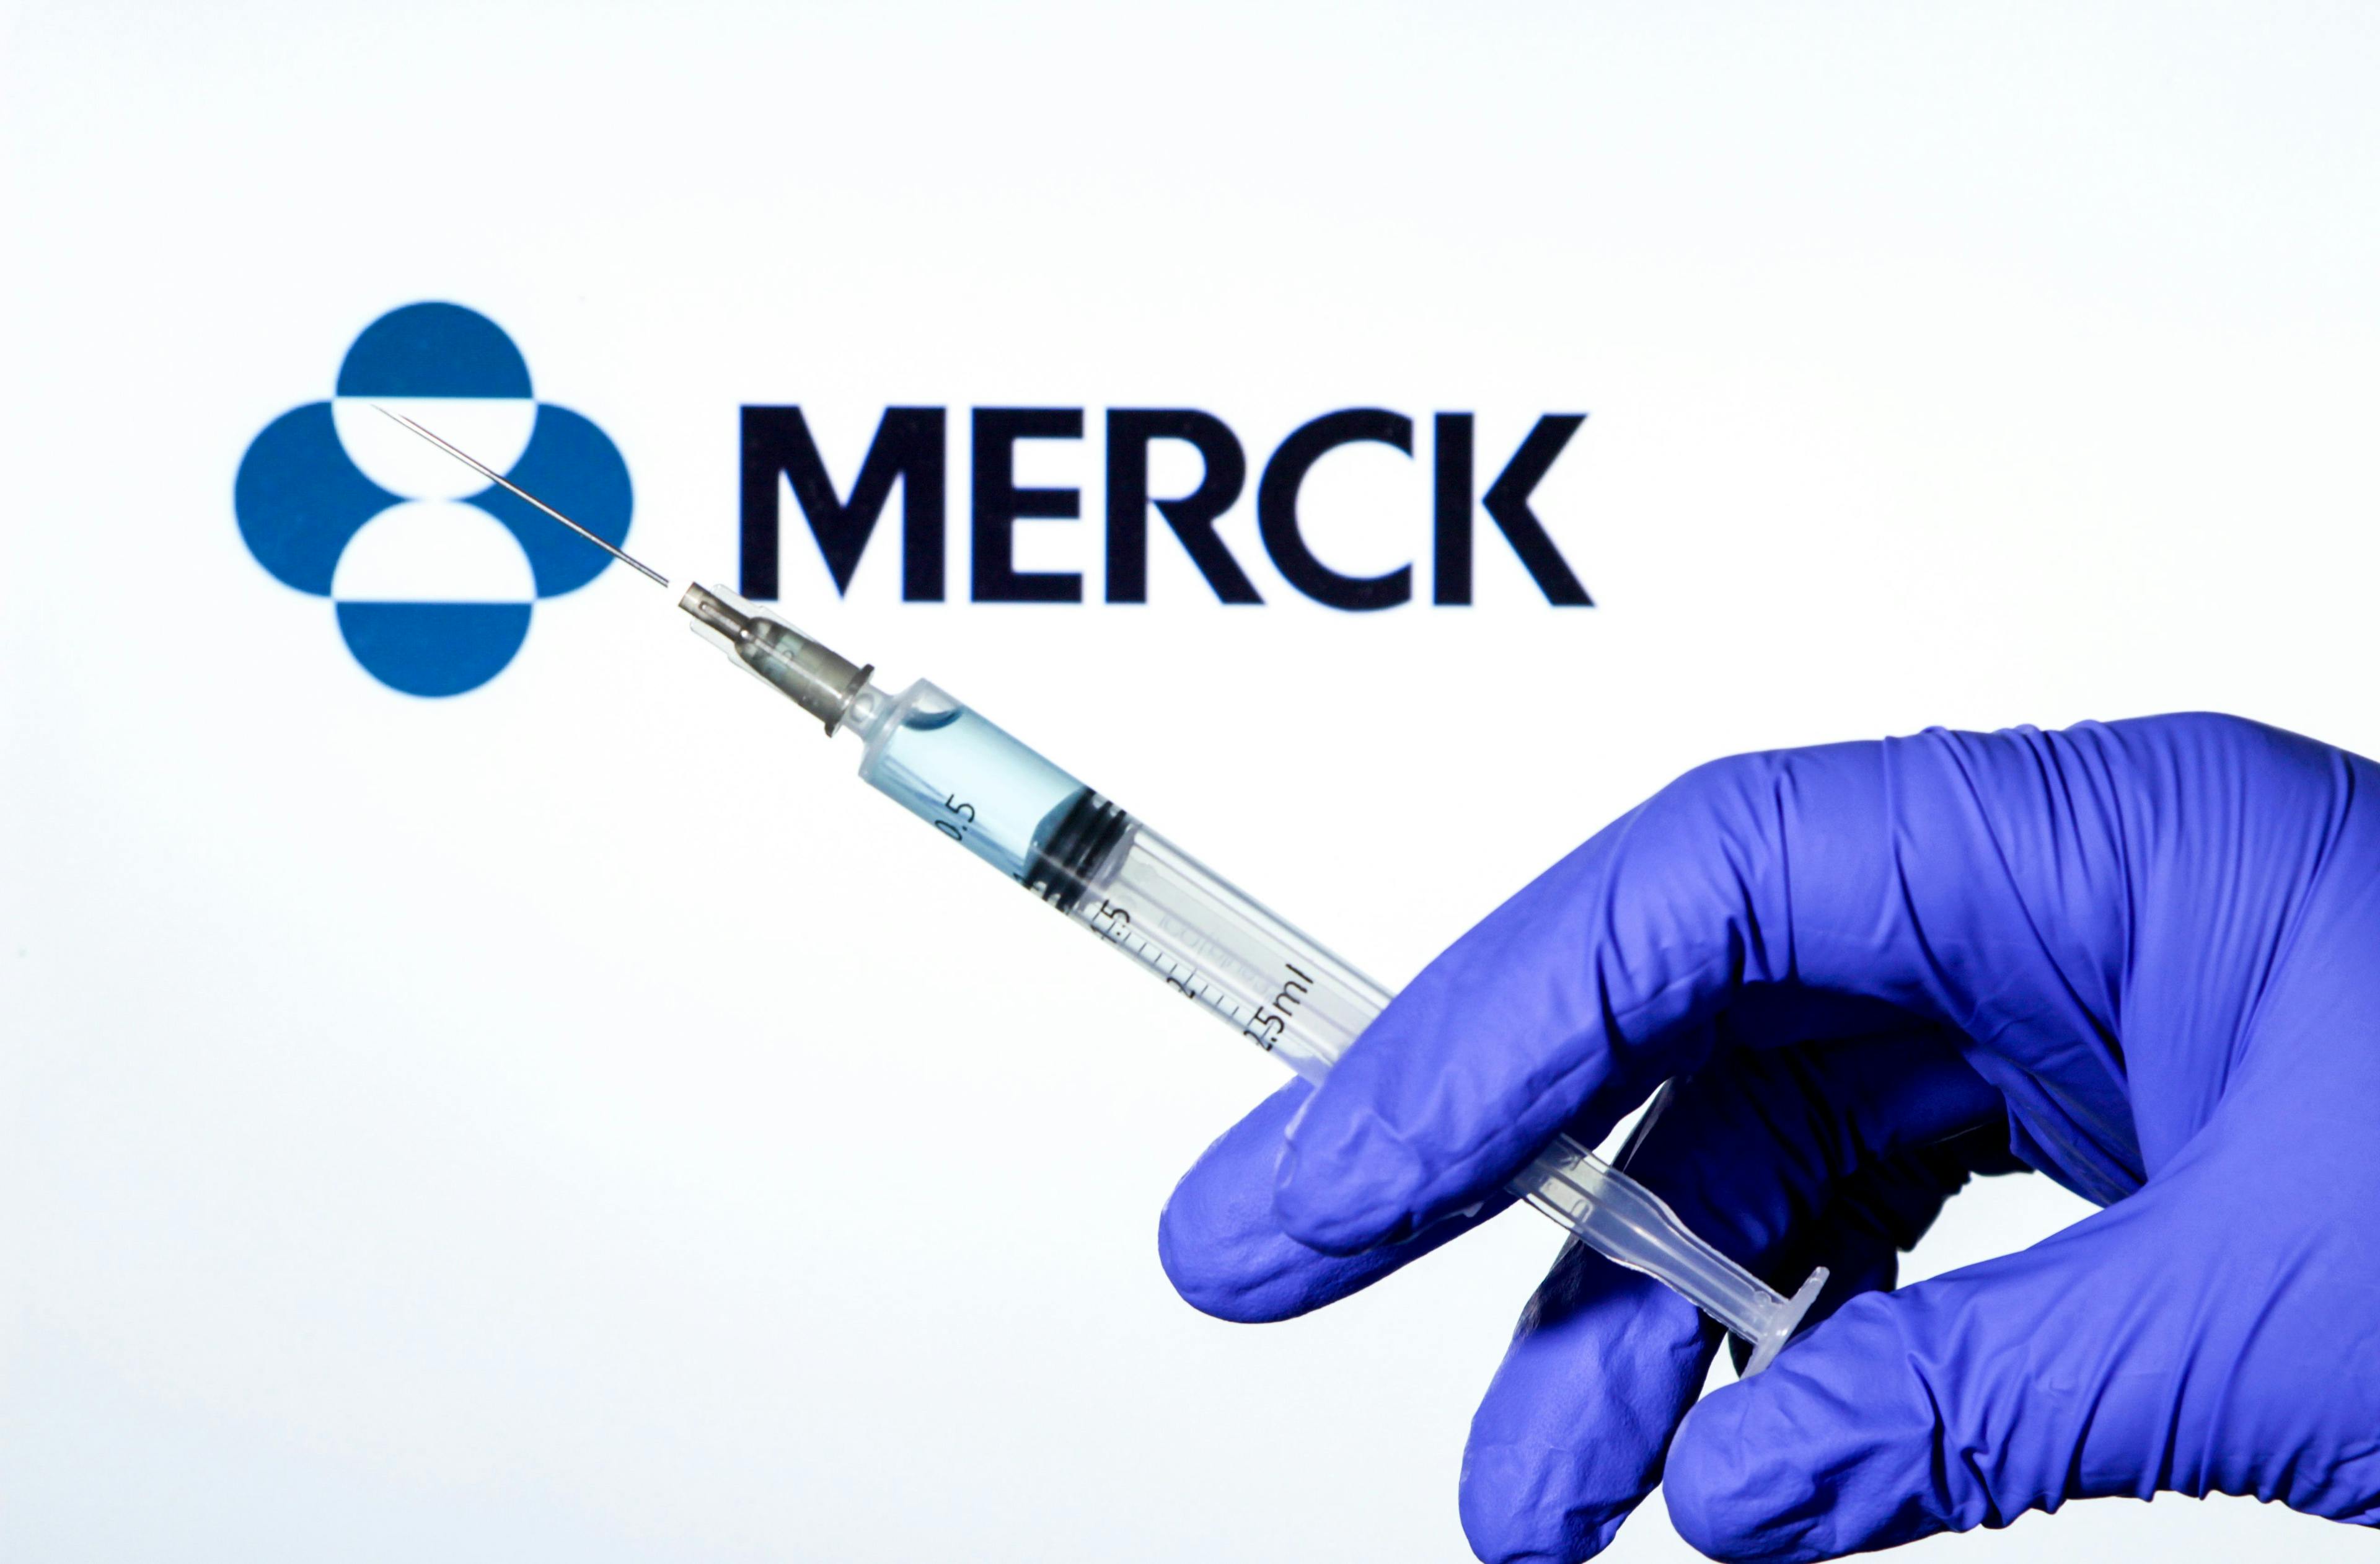 Syringe with Merck logo | Image Credit: © SoniaBonet - stock.adobe.com